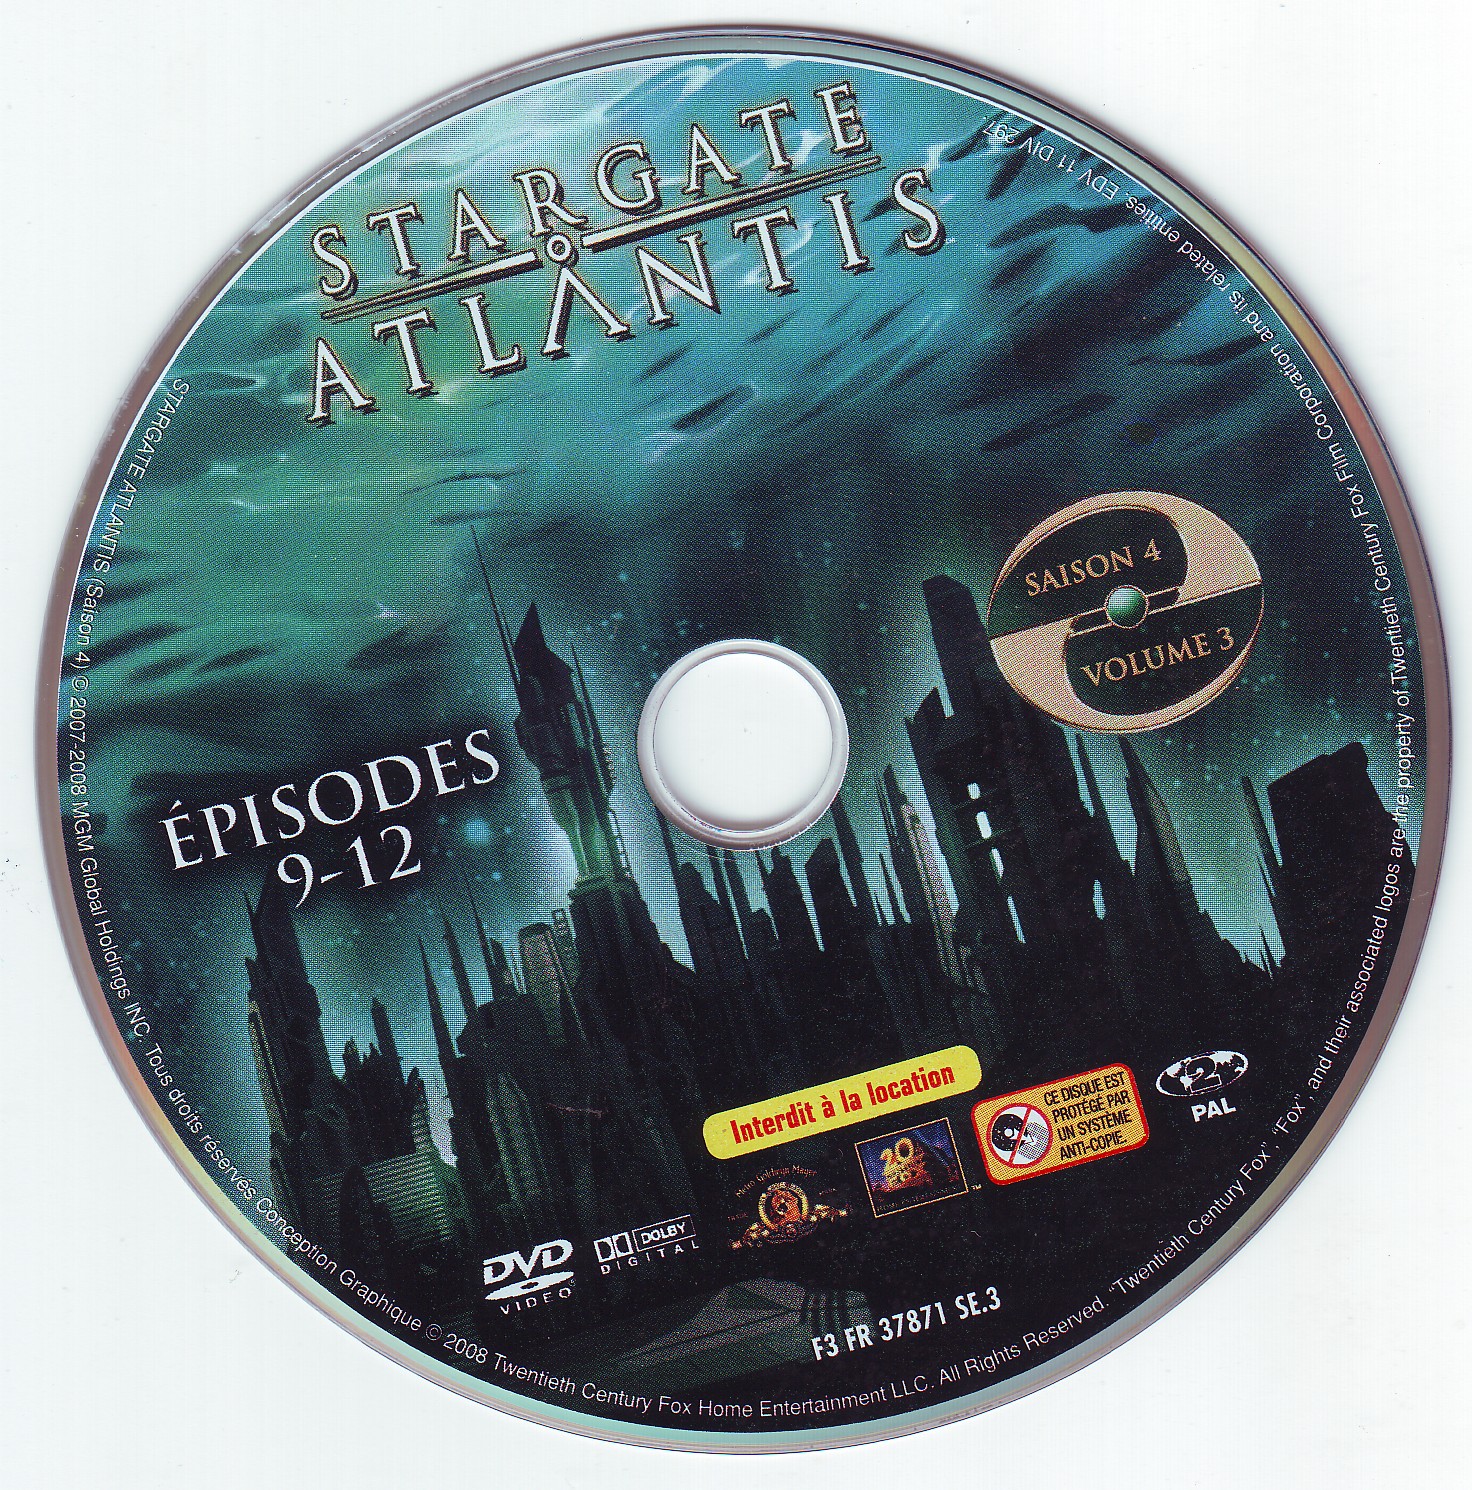 Stargate Atlantis saison 4 DISC 3